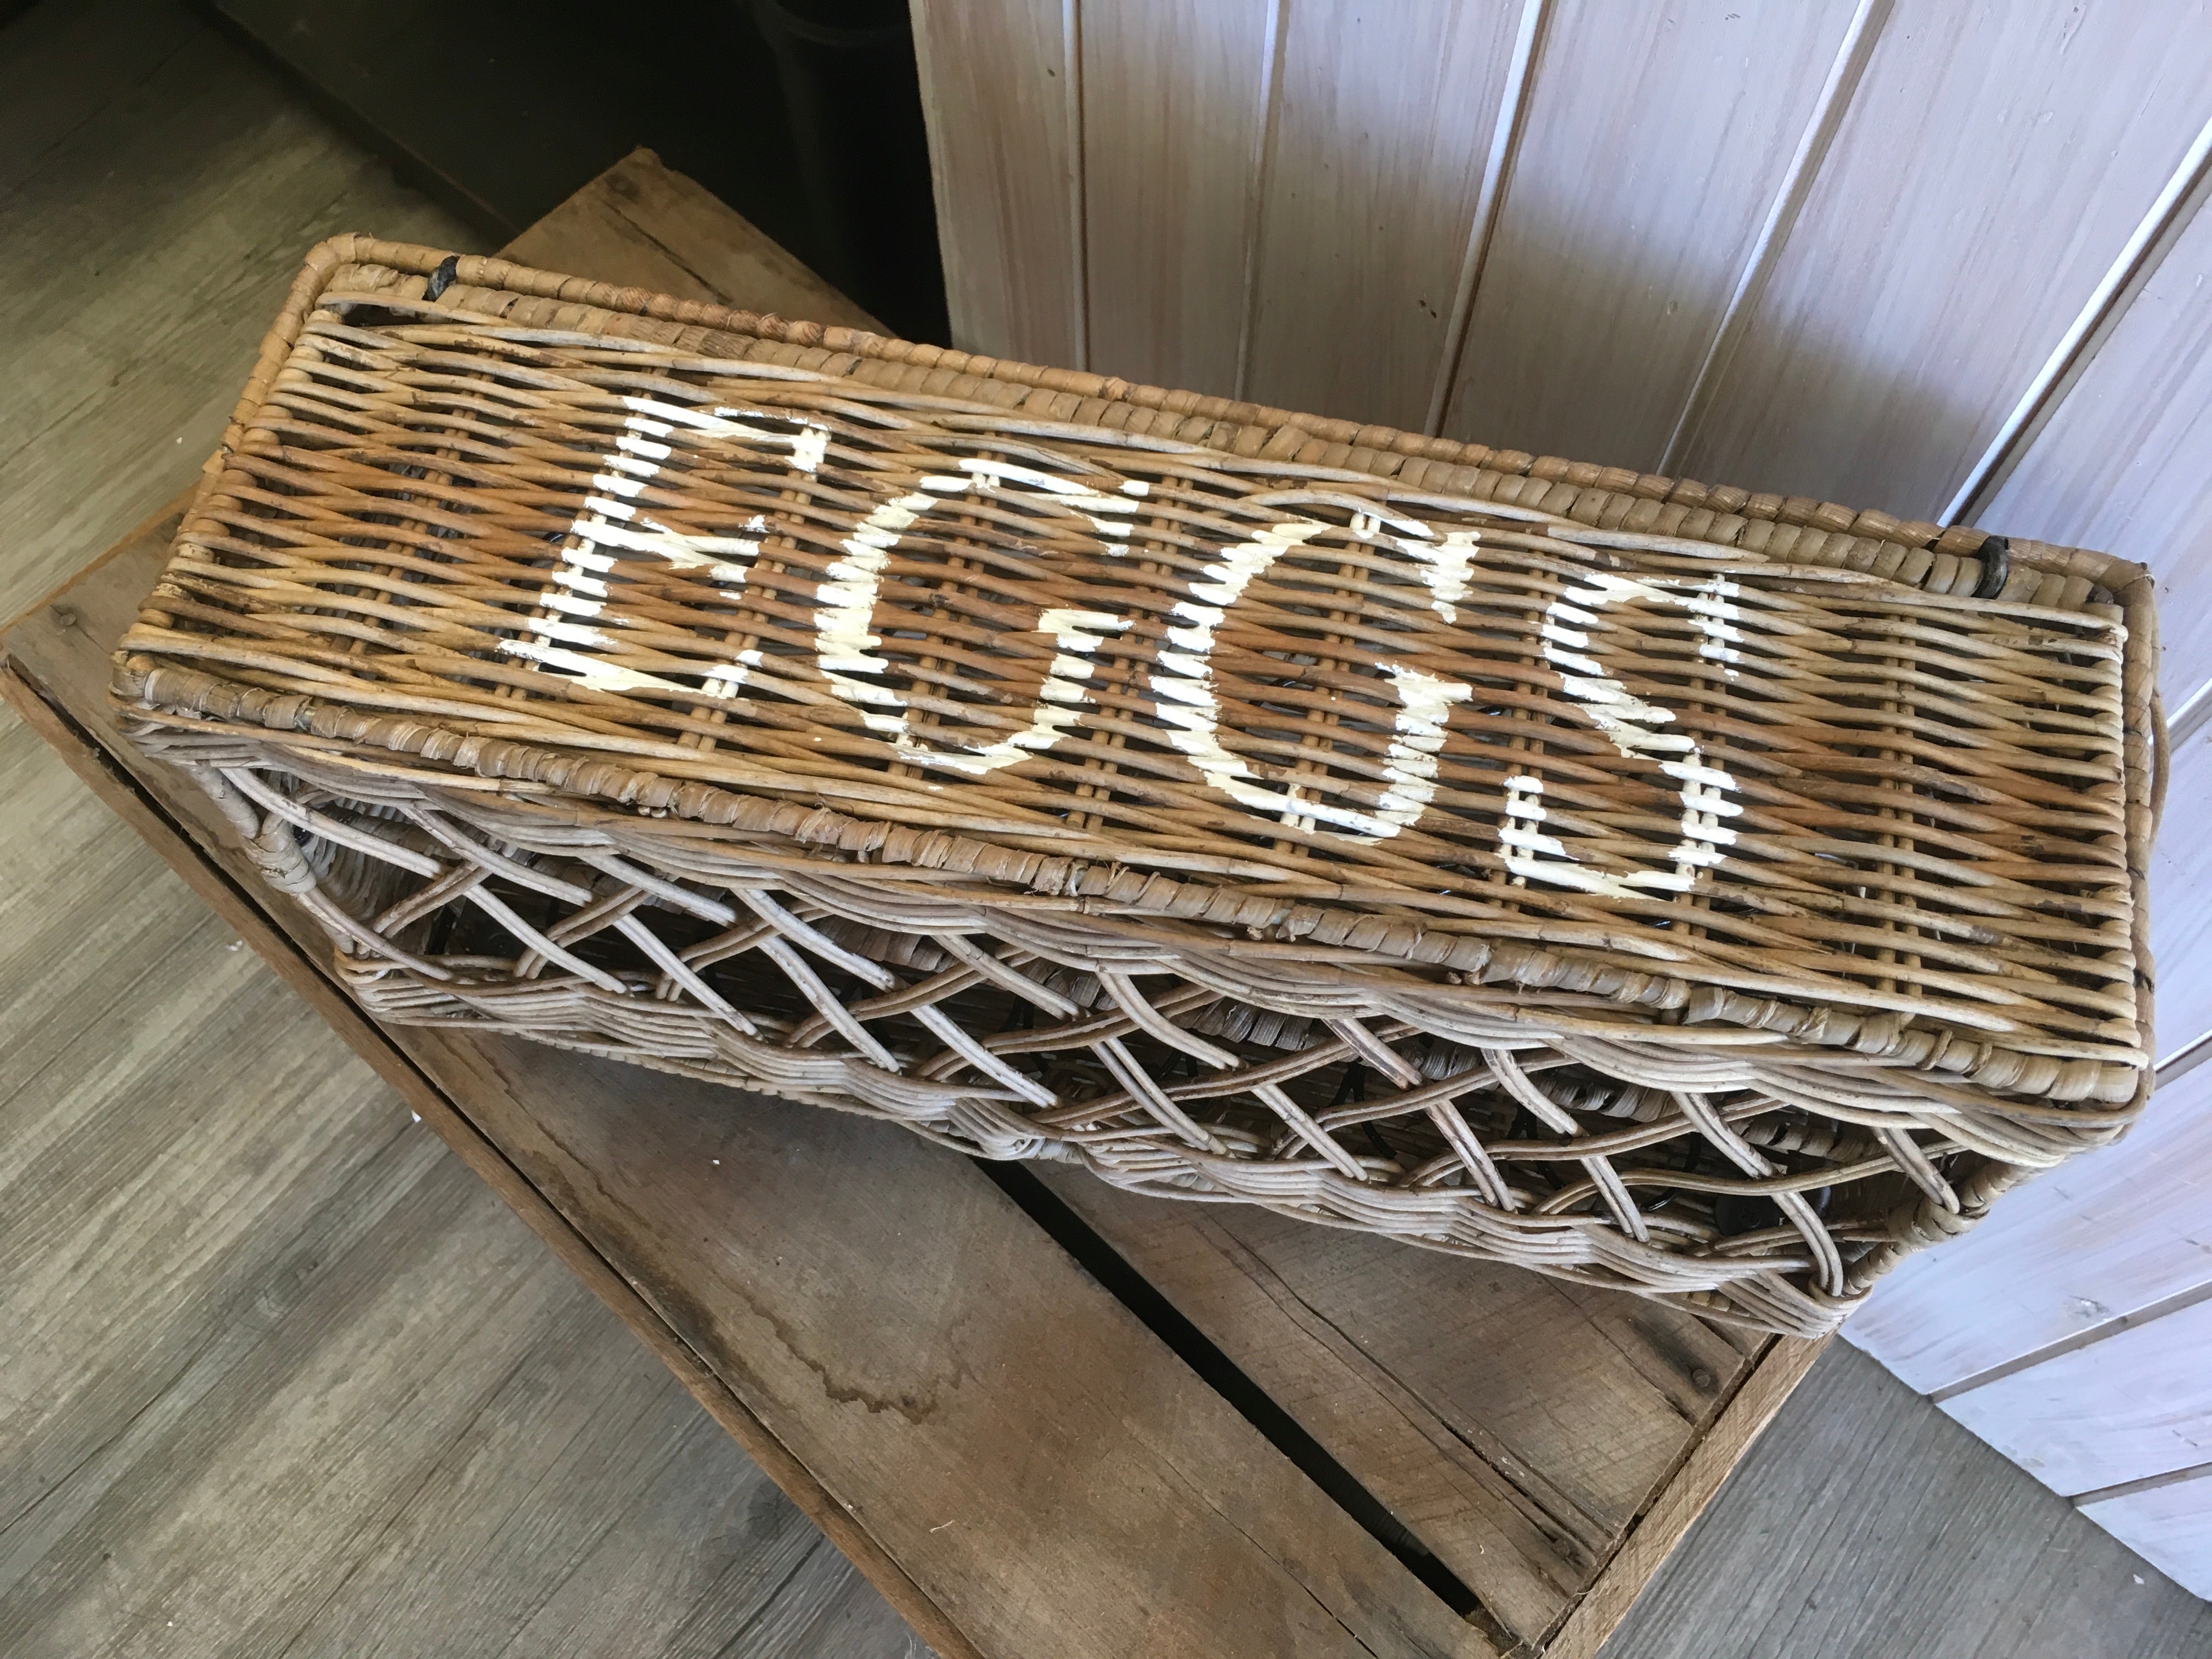 Rattan Eggs Basket